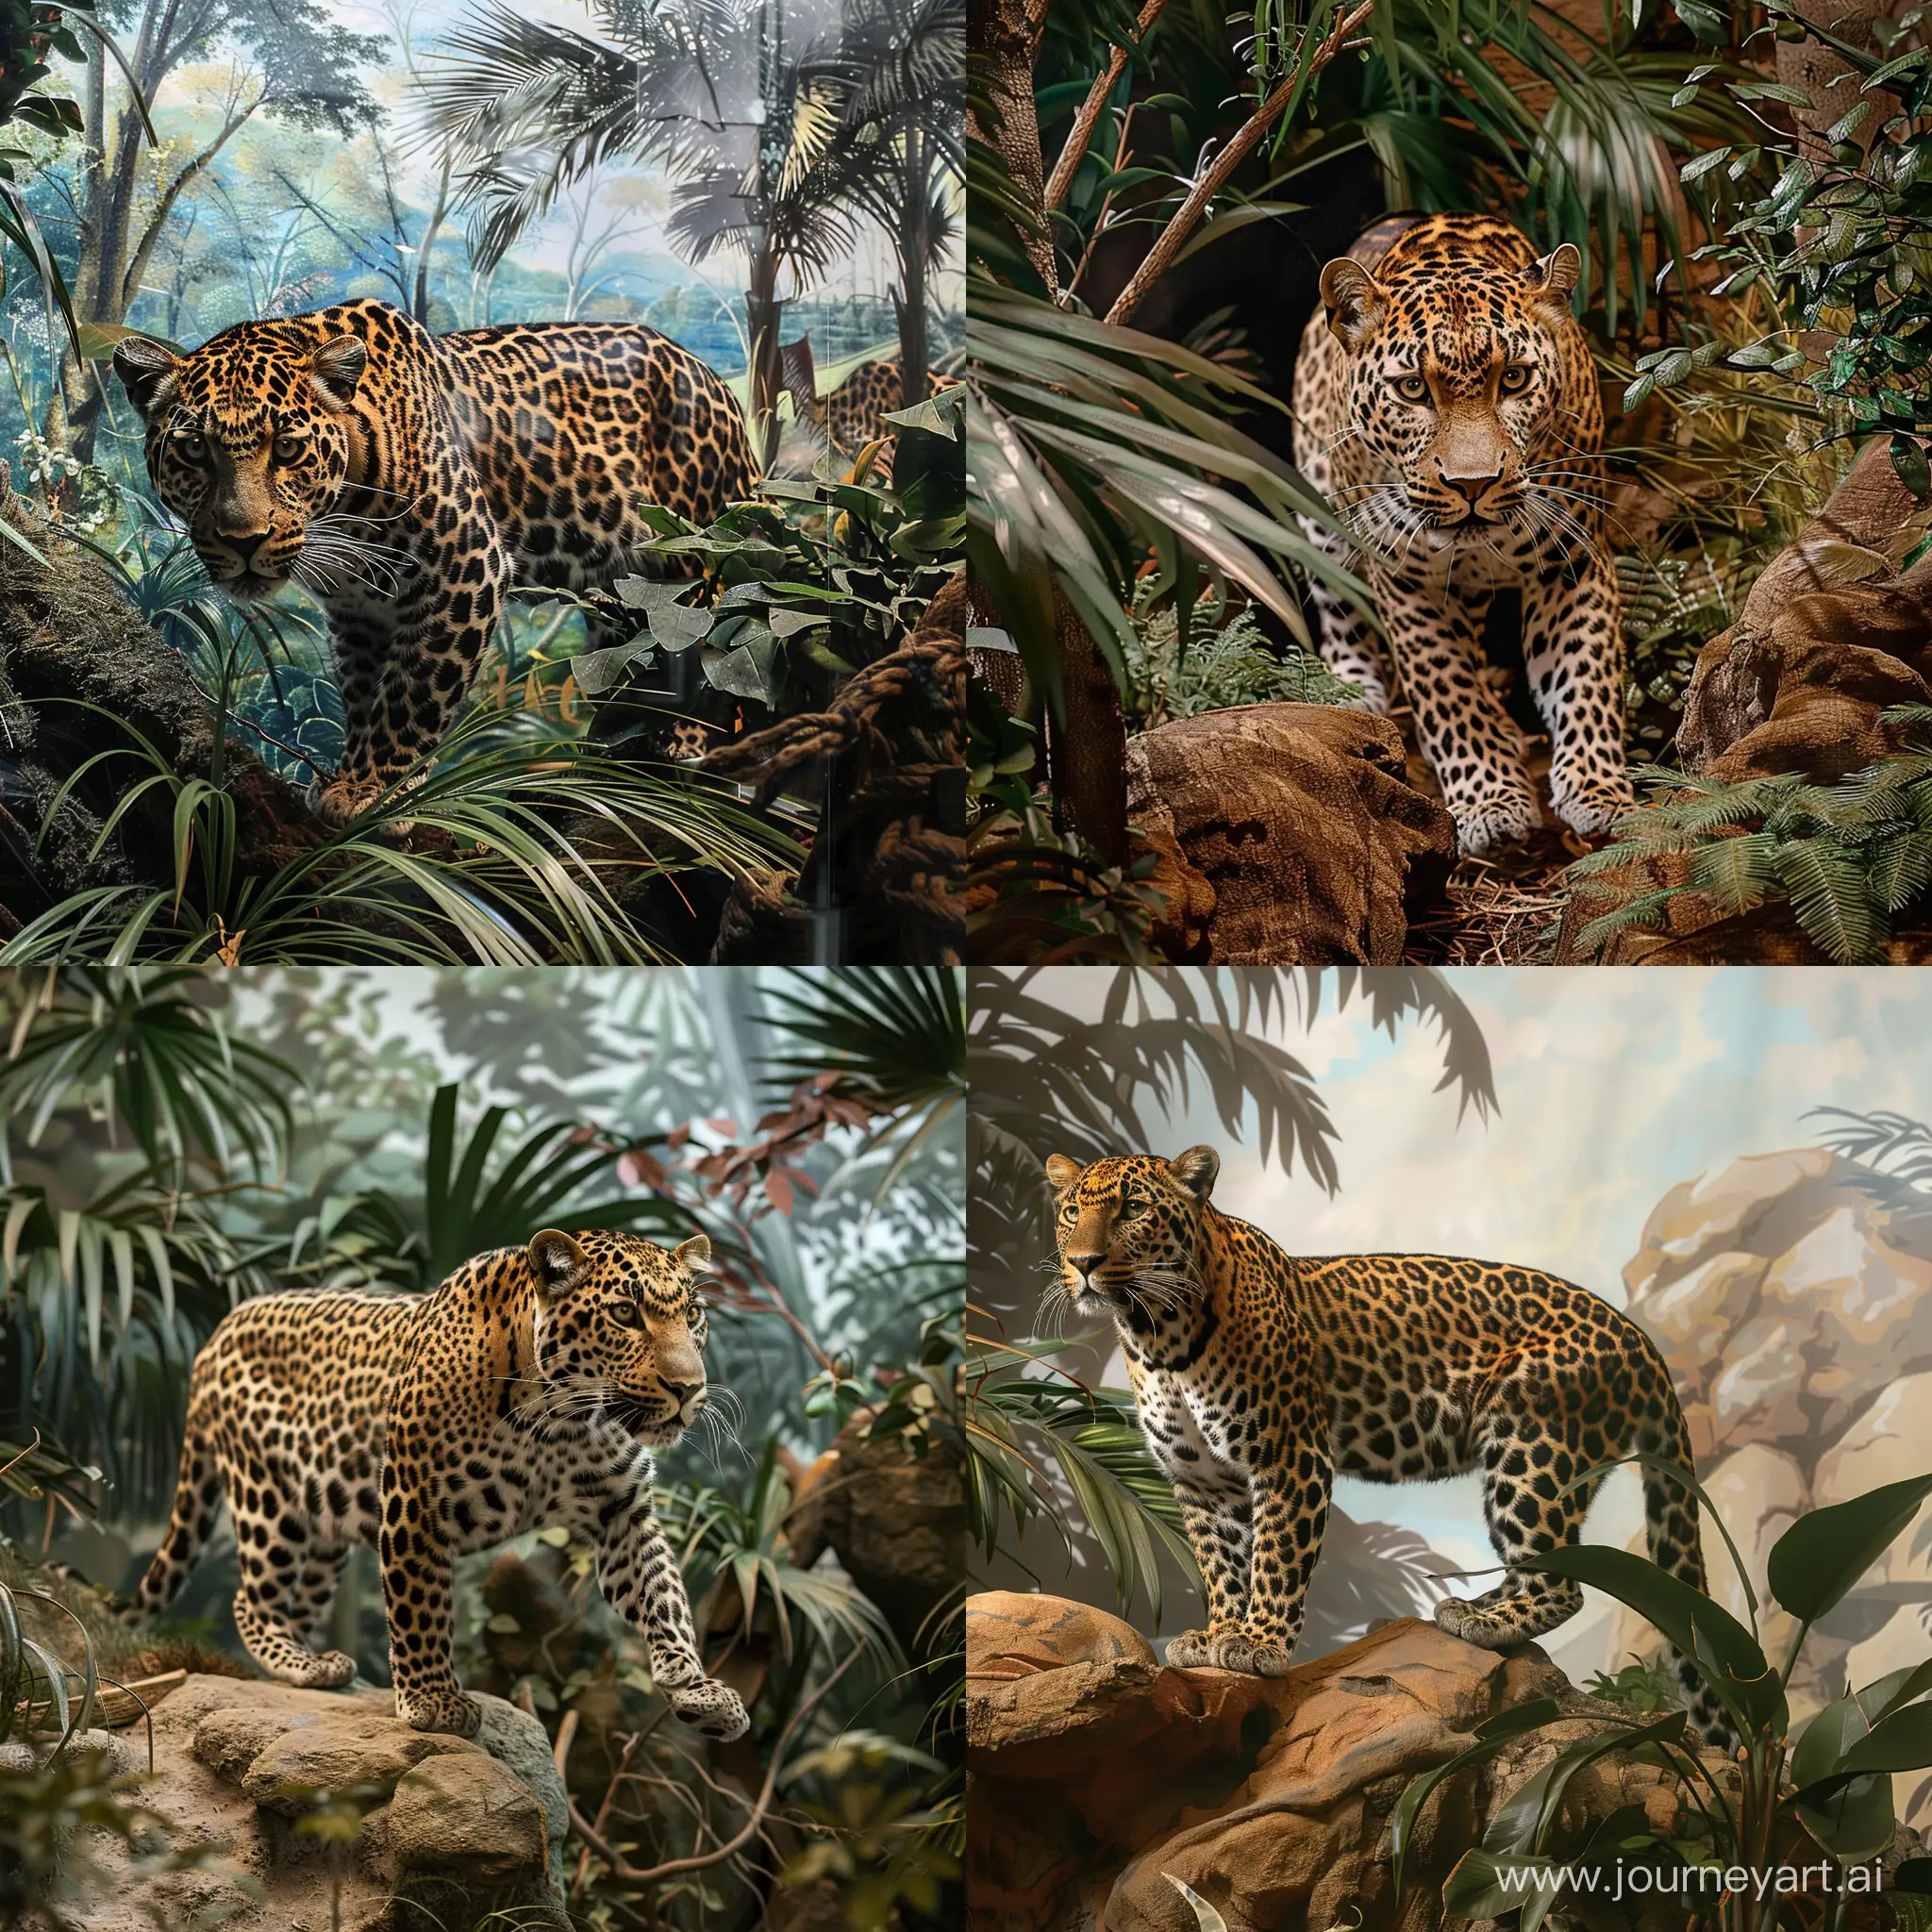 Detailed-Leopard-Habitat-Exhibit-at-Full-Zoo-Creative-Wildlife-Scene